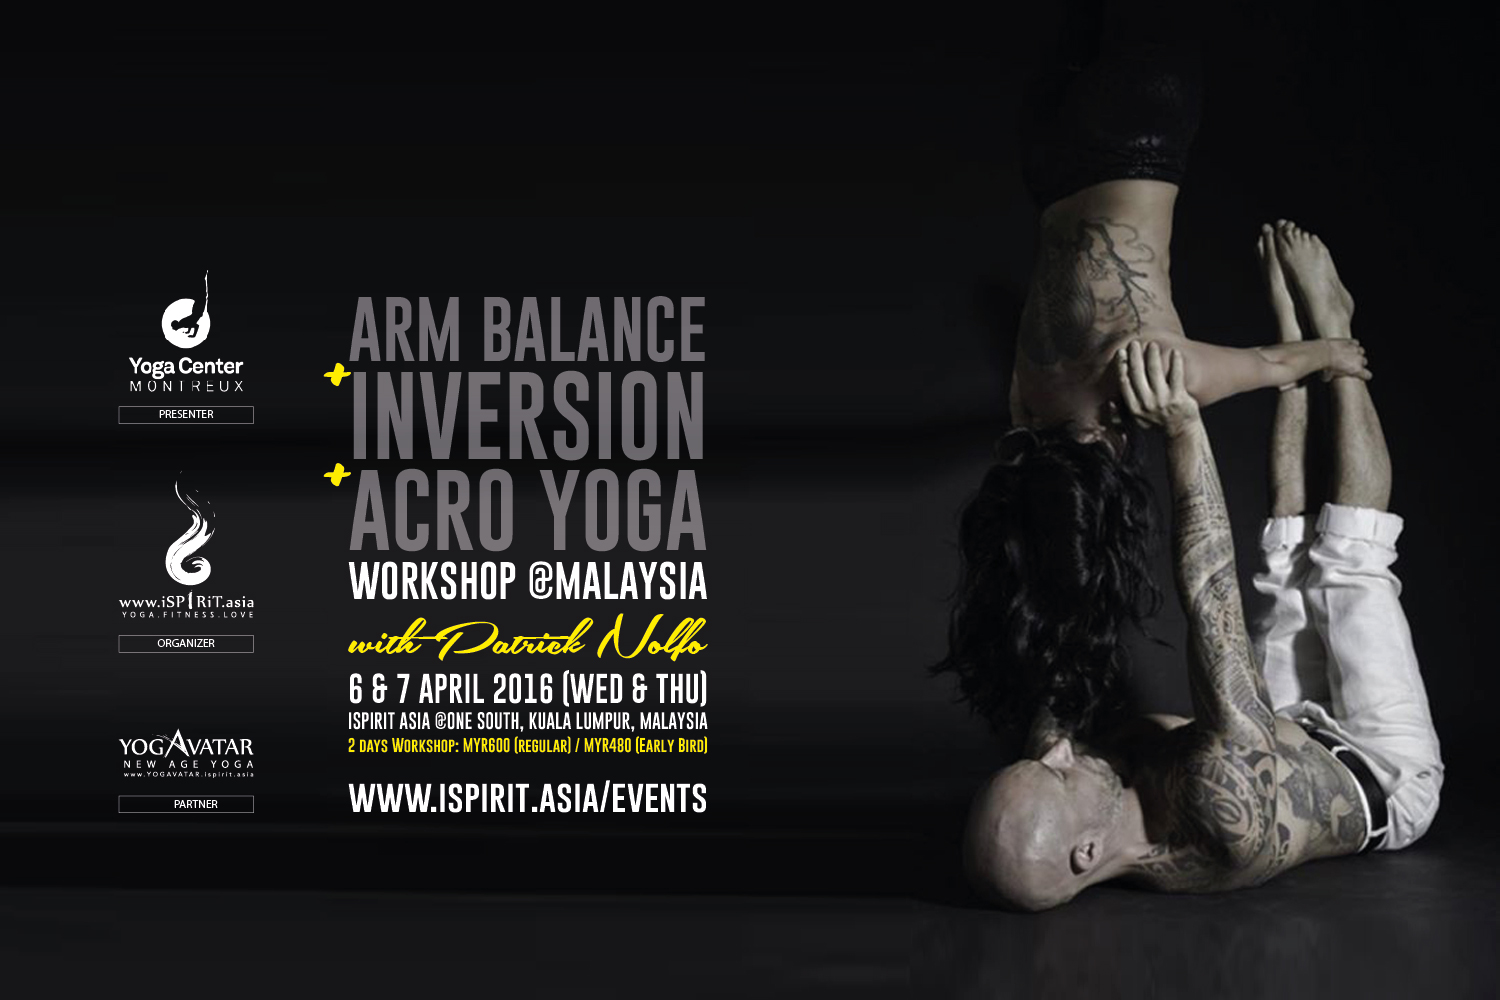 Arm Balance Inversion Acro Yoga Workshop Malaysia Patrick Nolfo